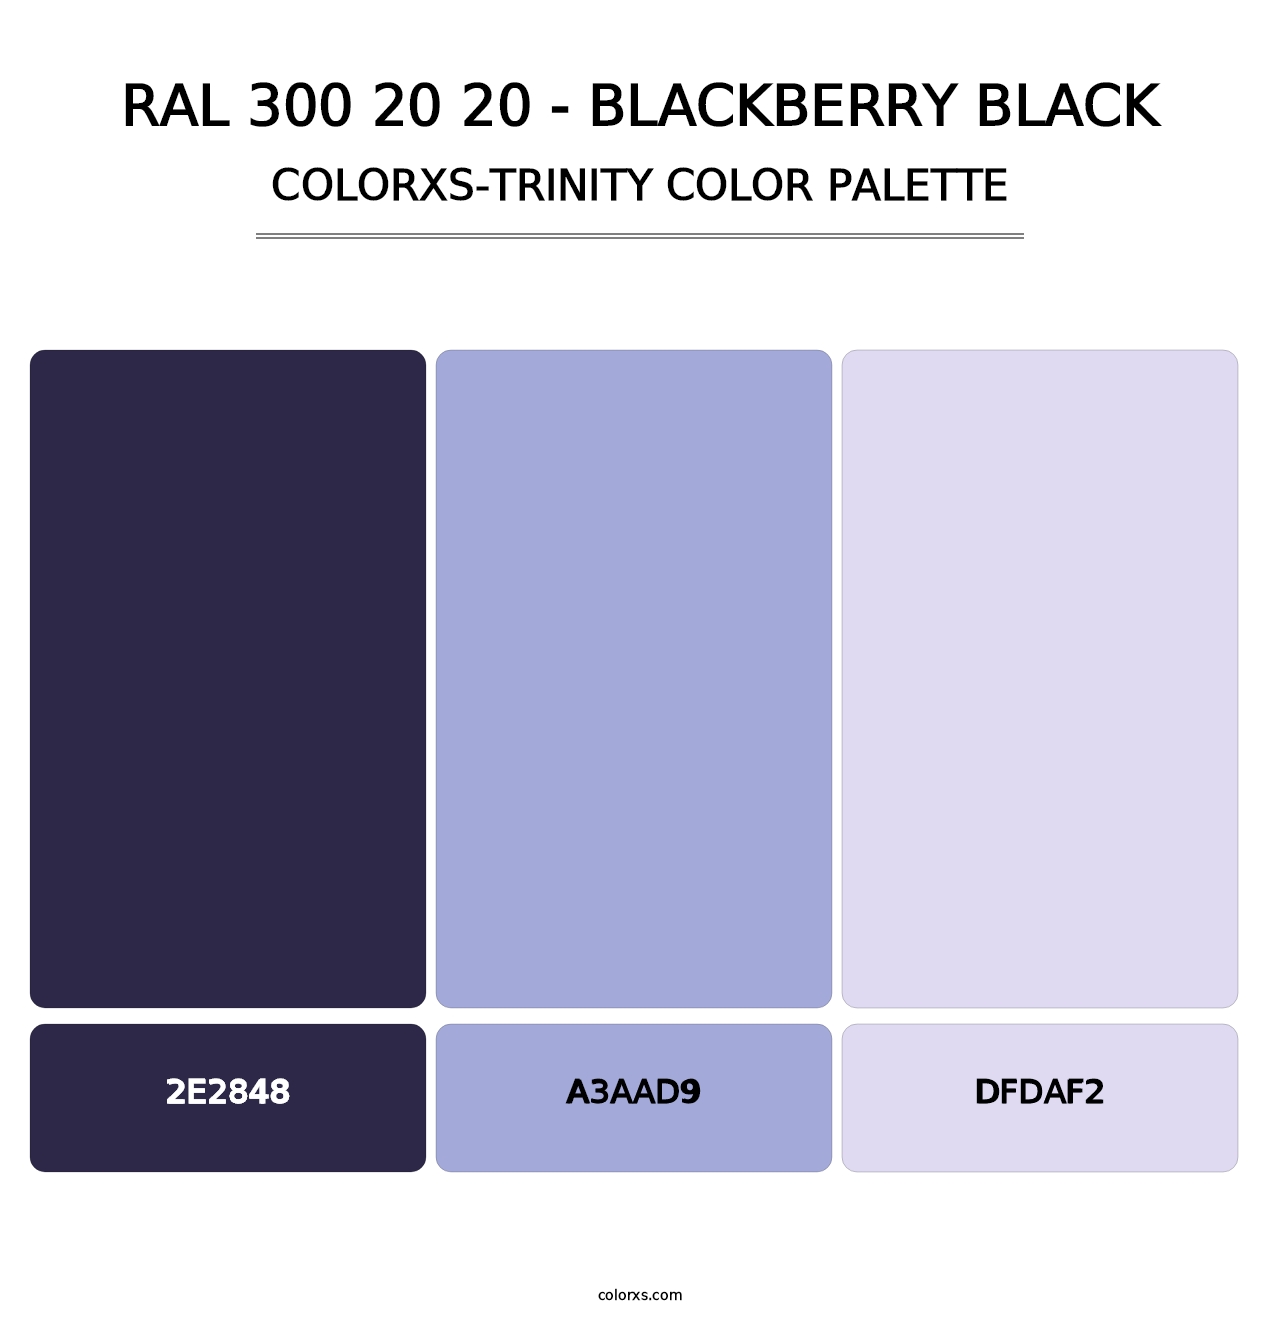 RAL 300 20 20 - Blackberry Black - Colorxs Trinity Palette